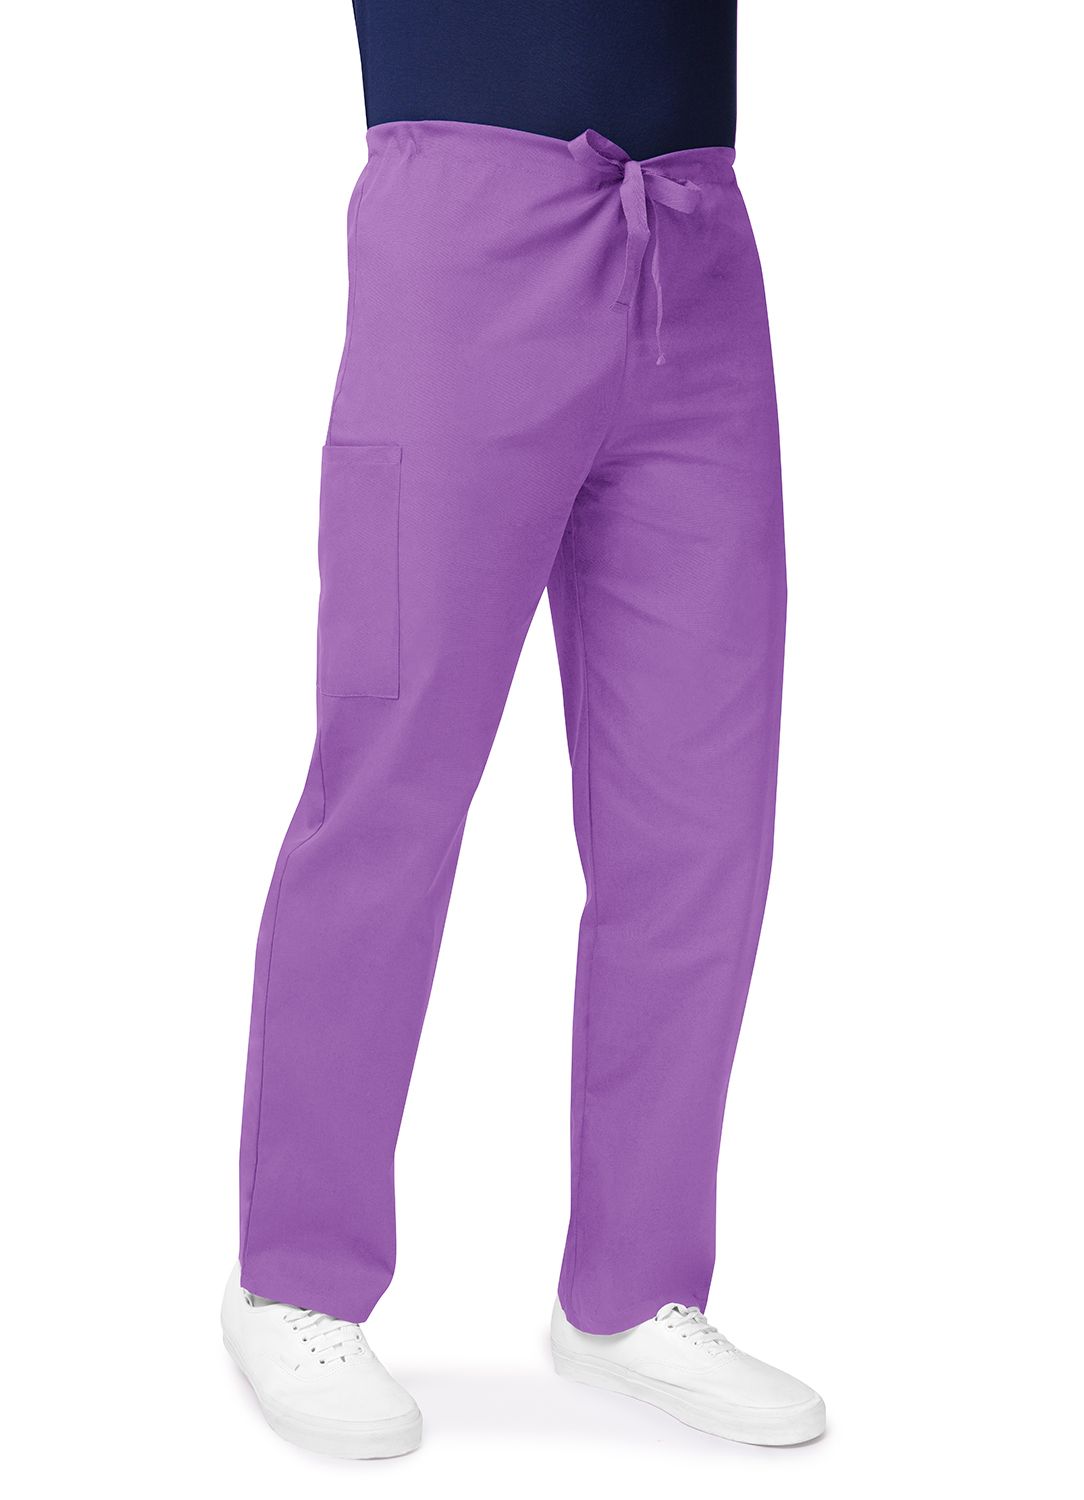 Unisex Drawstring Pants by Adar XS-5X / Lavender